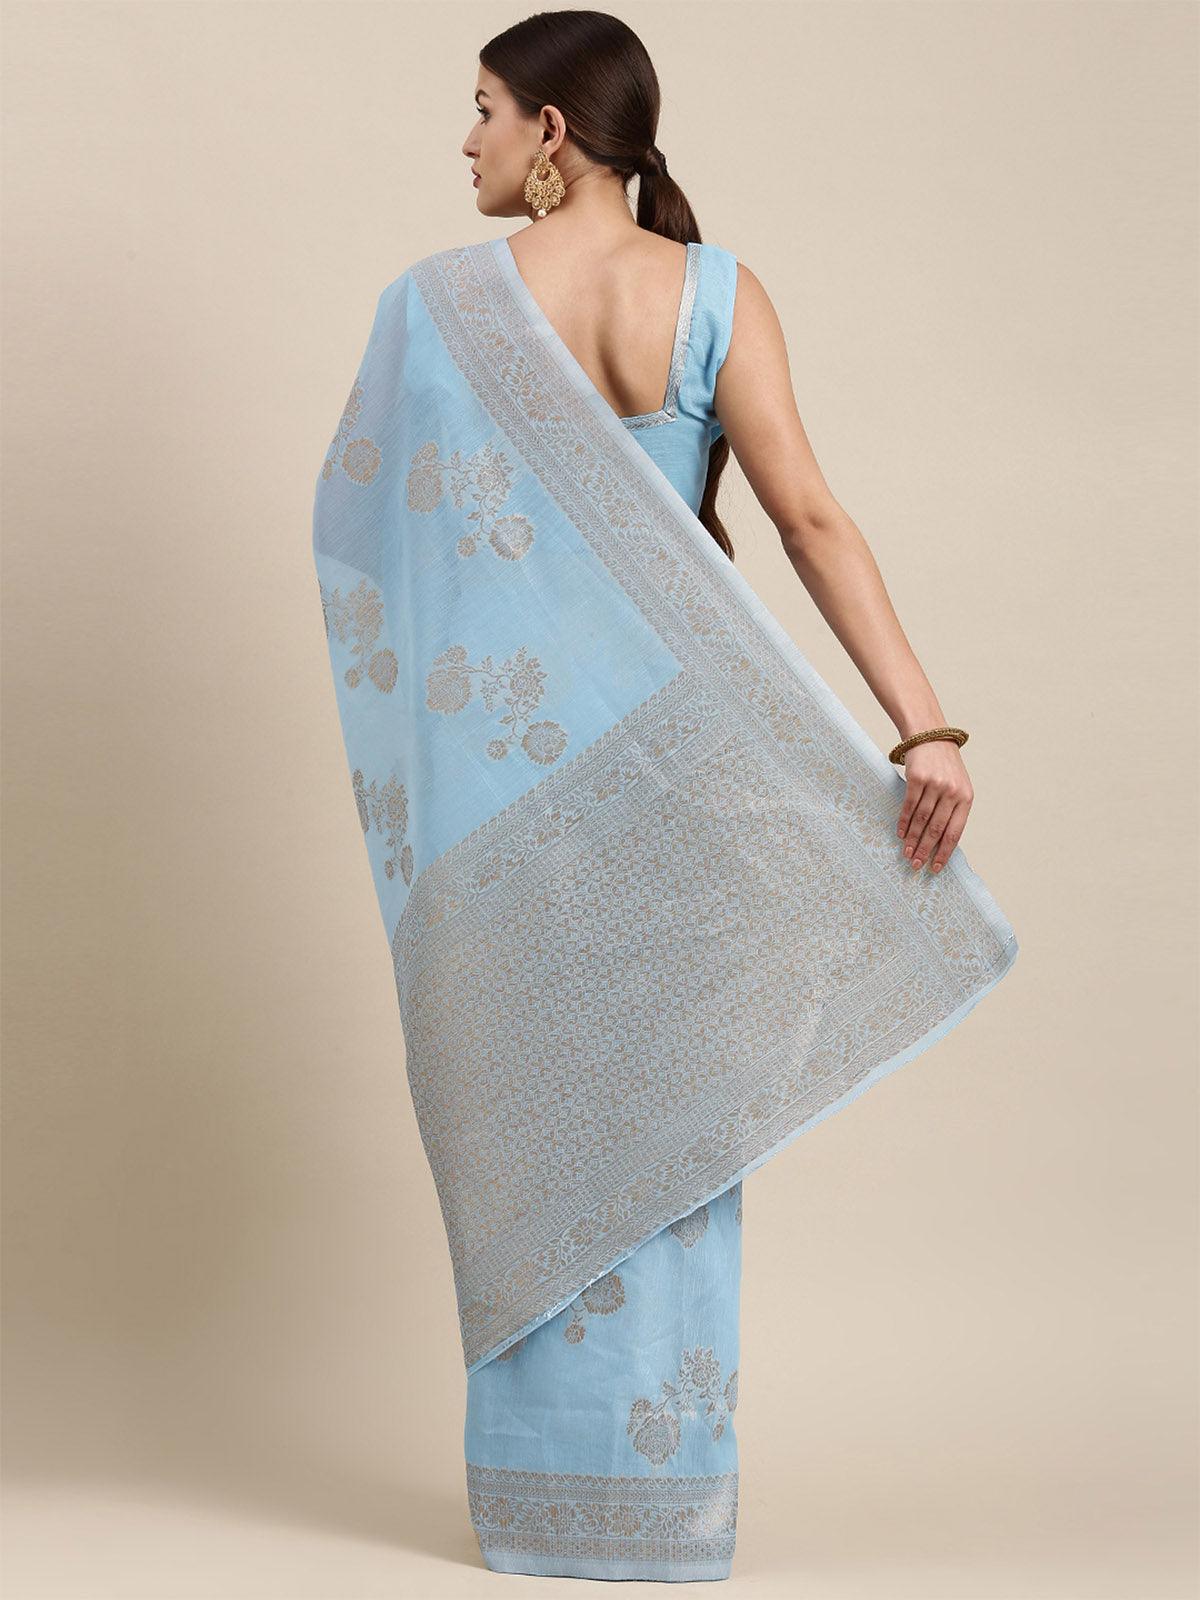 Women's Linen Blend Turquoise Woven Design Designer Saree With Blouse Piece - Odette